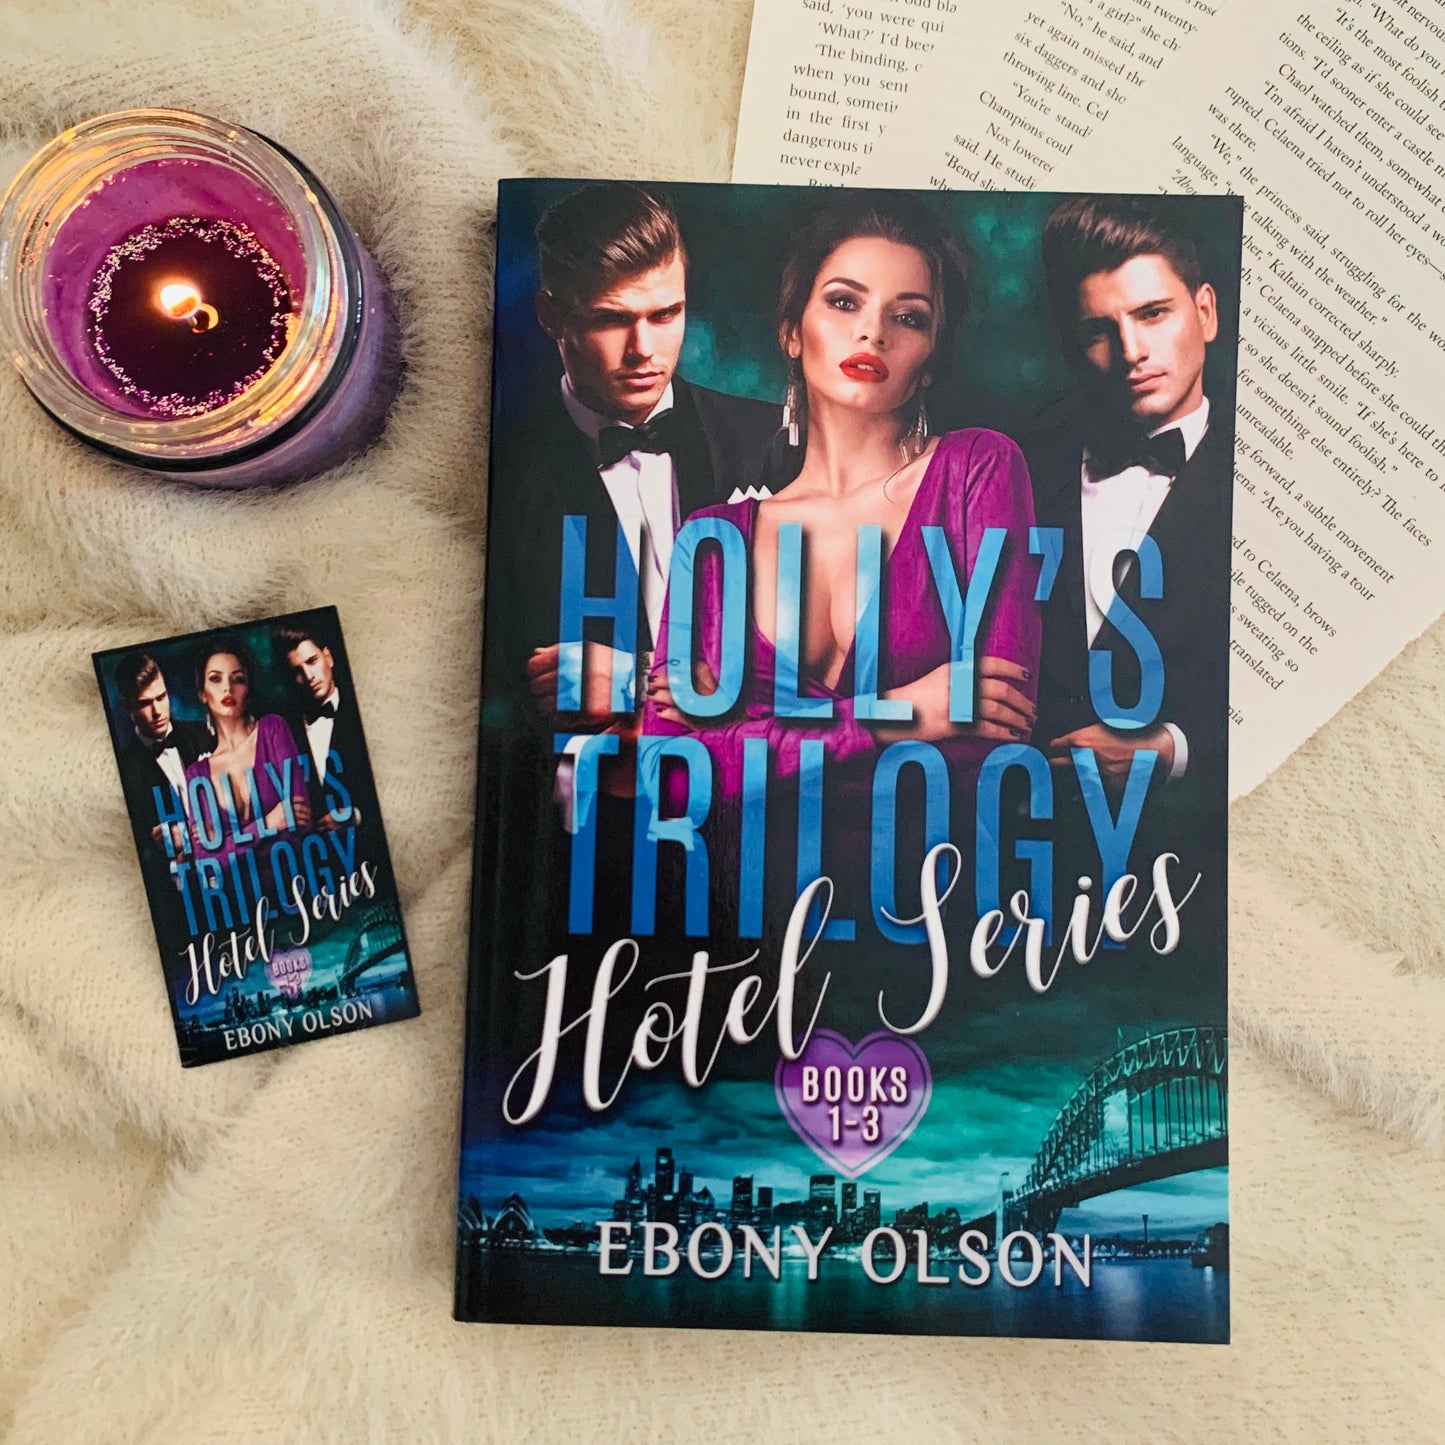 Holly’s Trilogy Books 1-3 by Ebony Olson